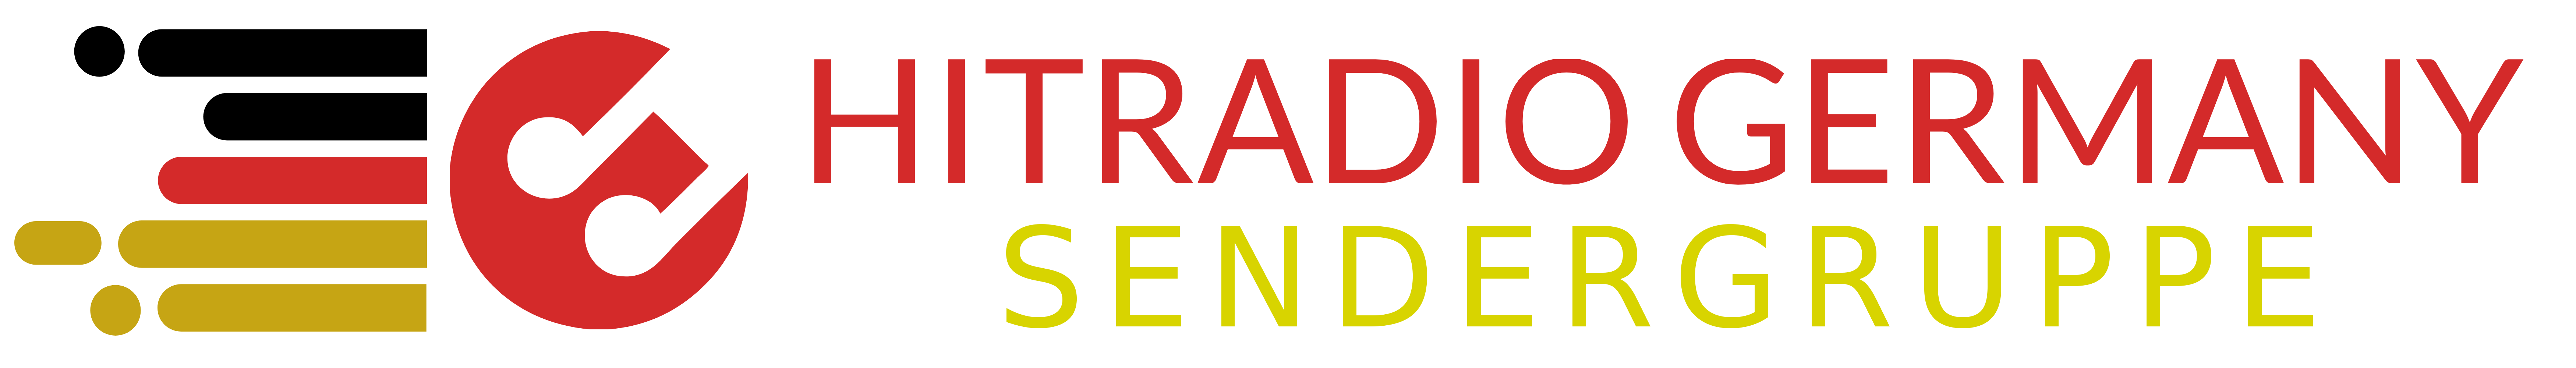 Hitradio Germany Sendergruppe